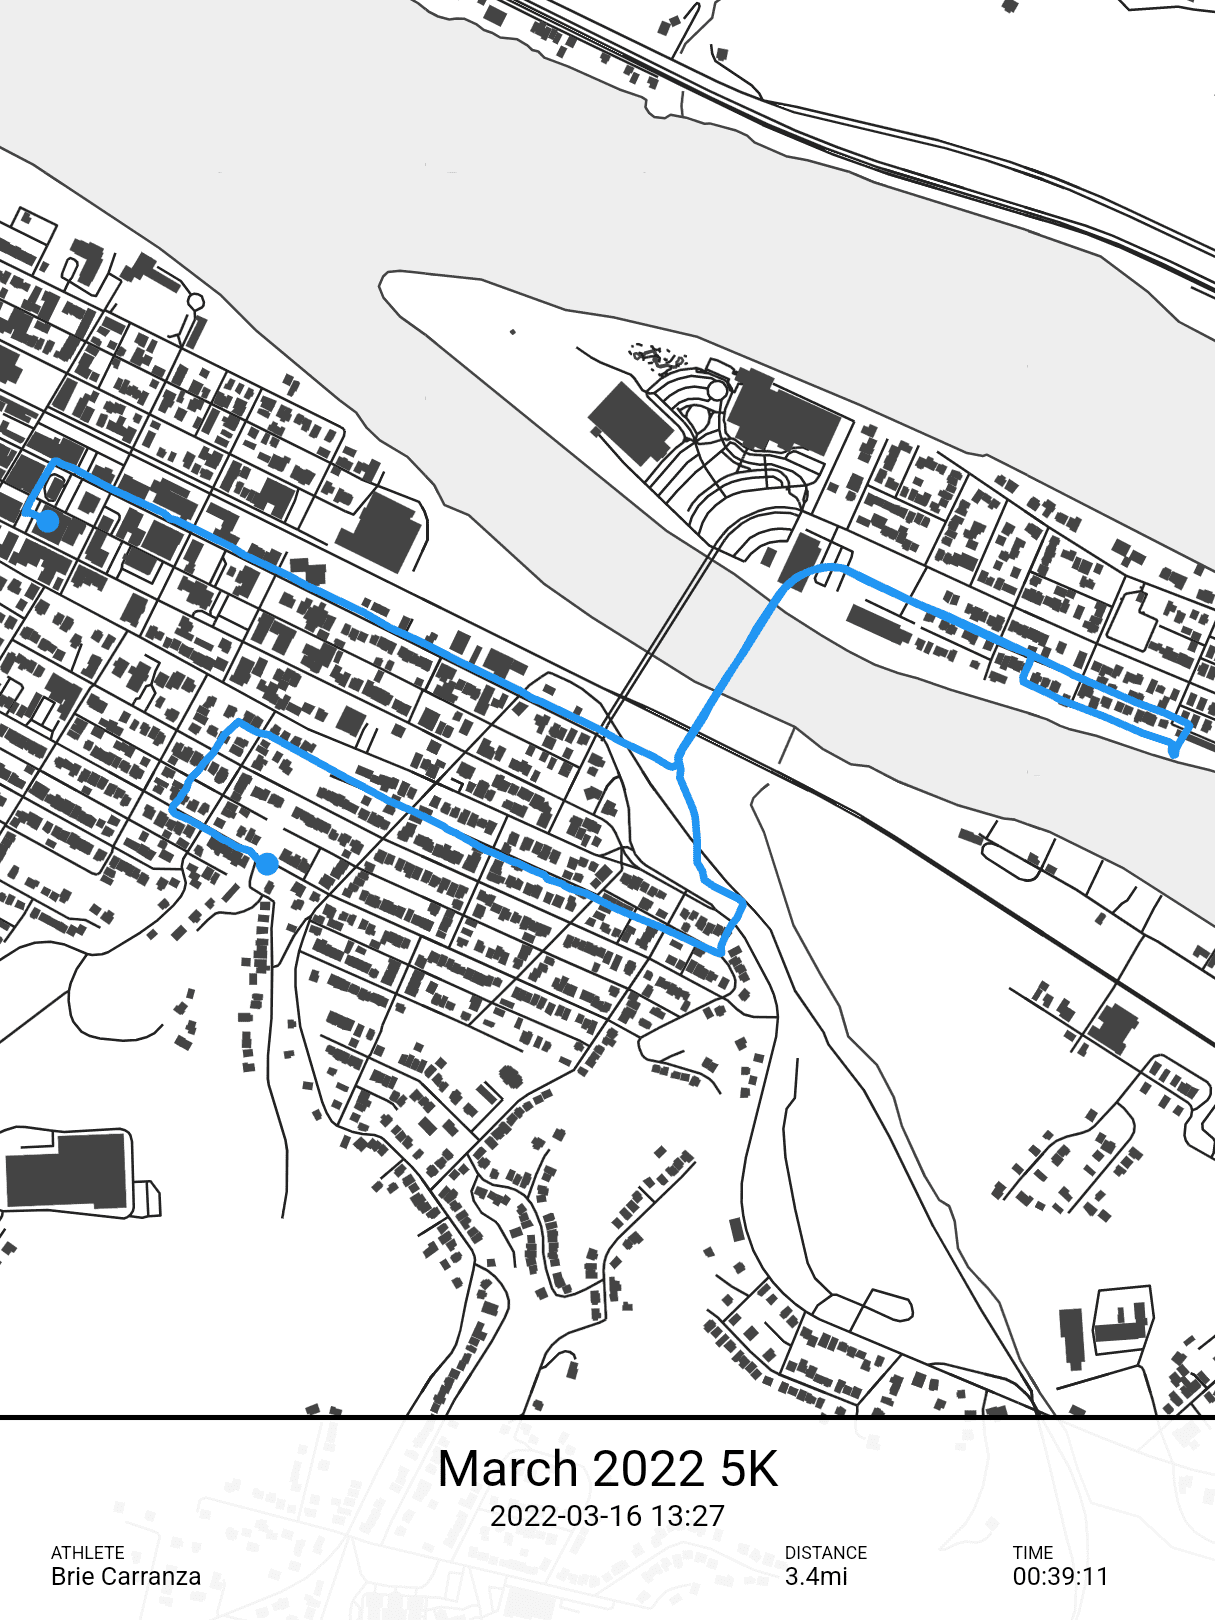 Map of March run in Coraopolis courtesy of Cartorion.com